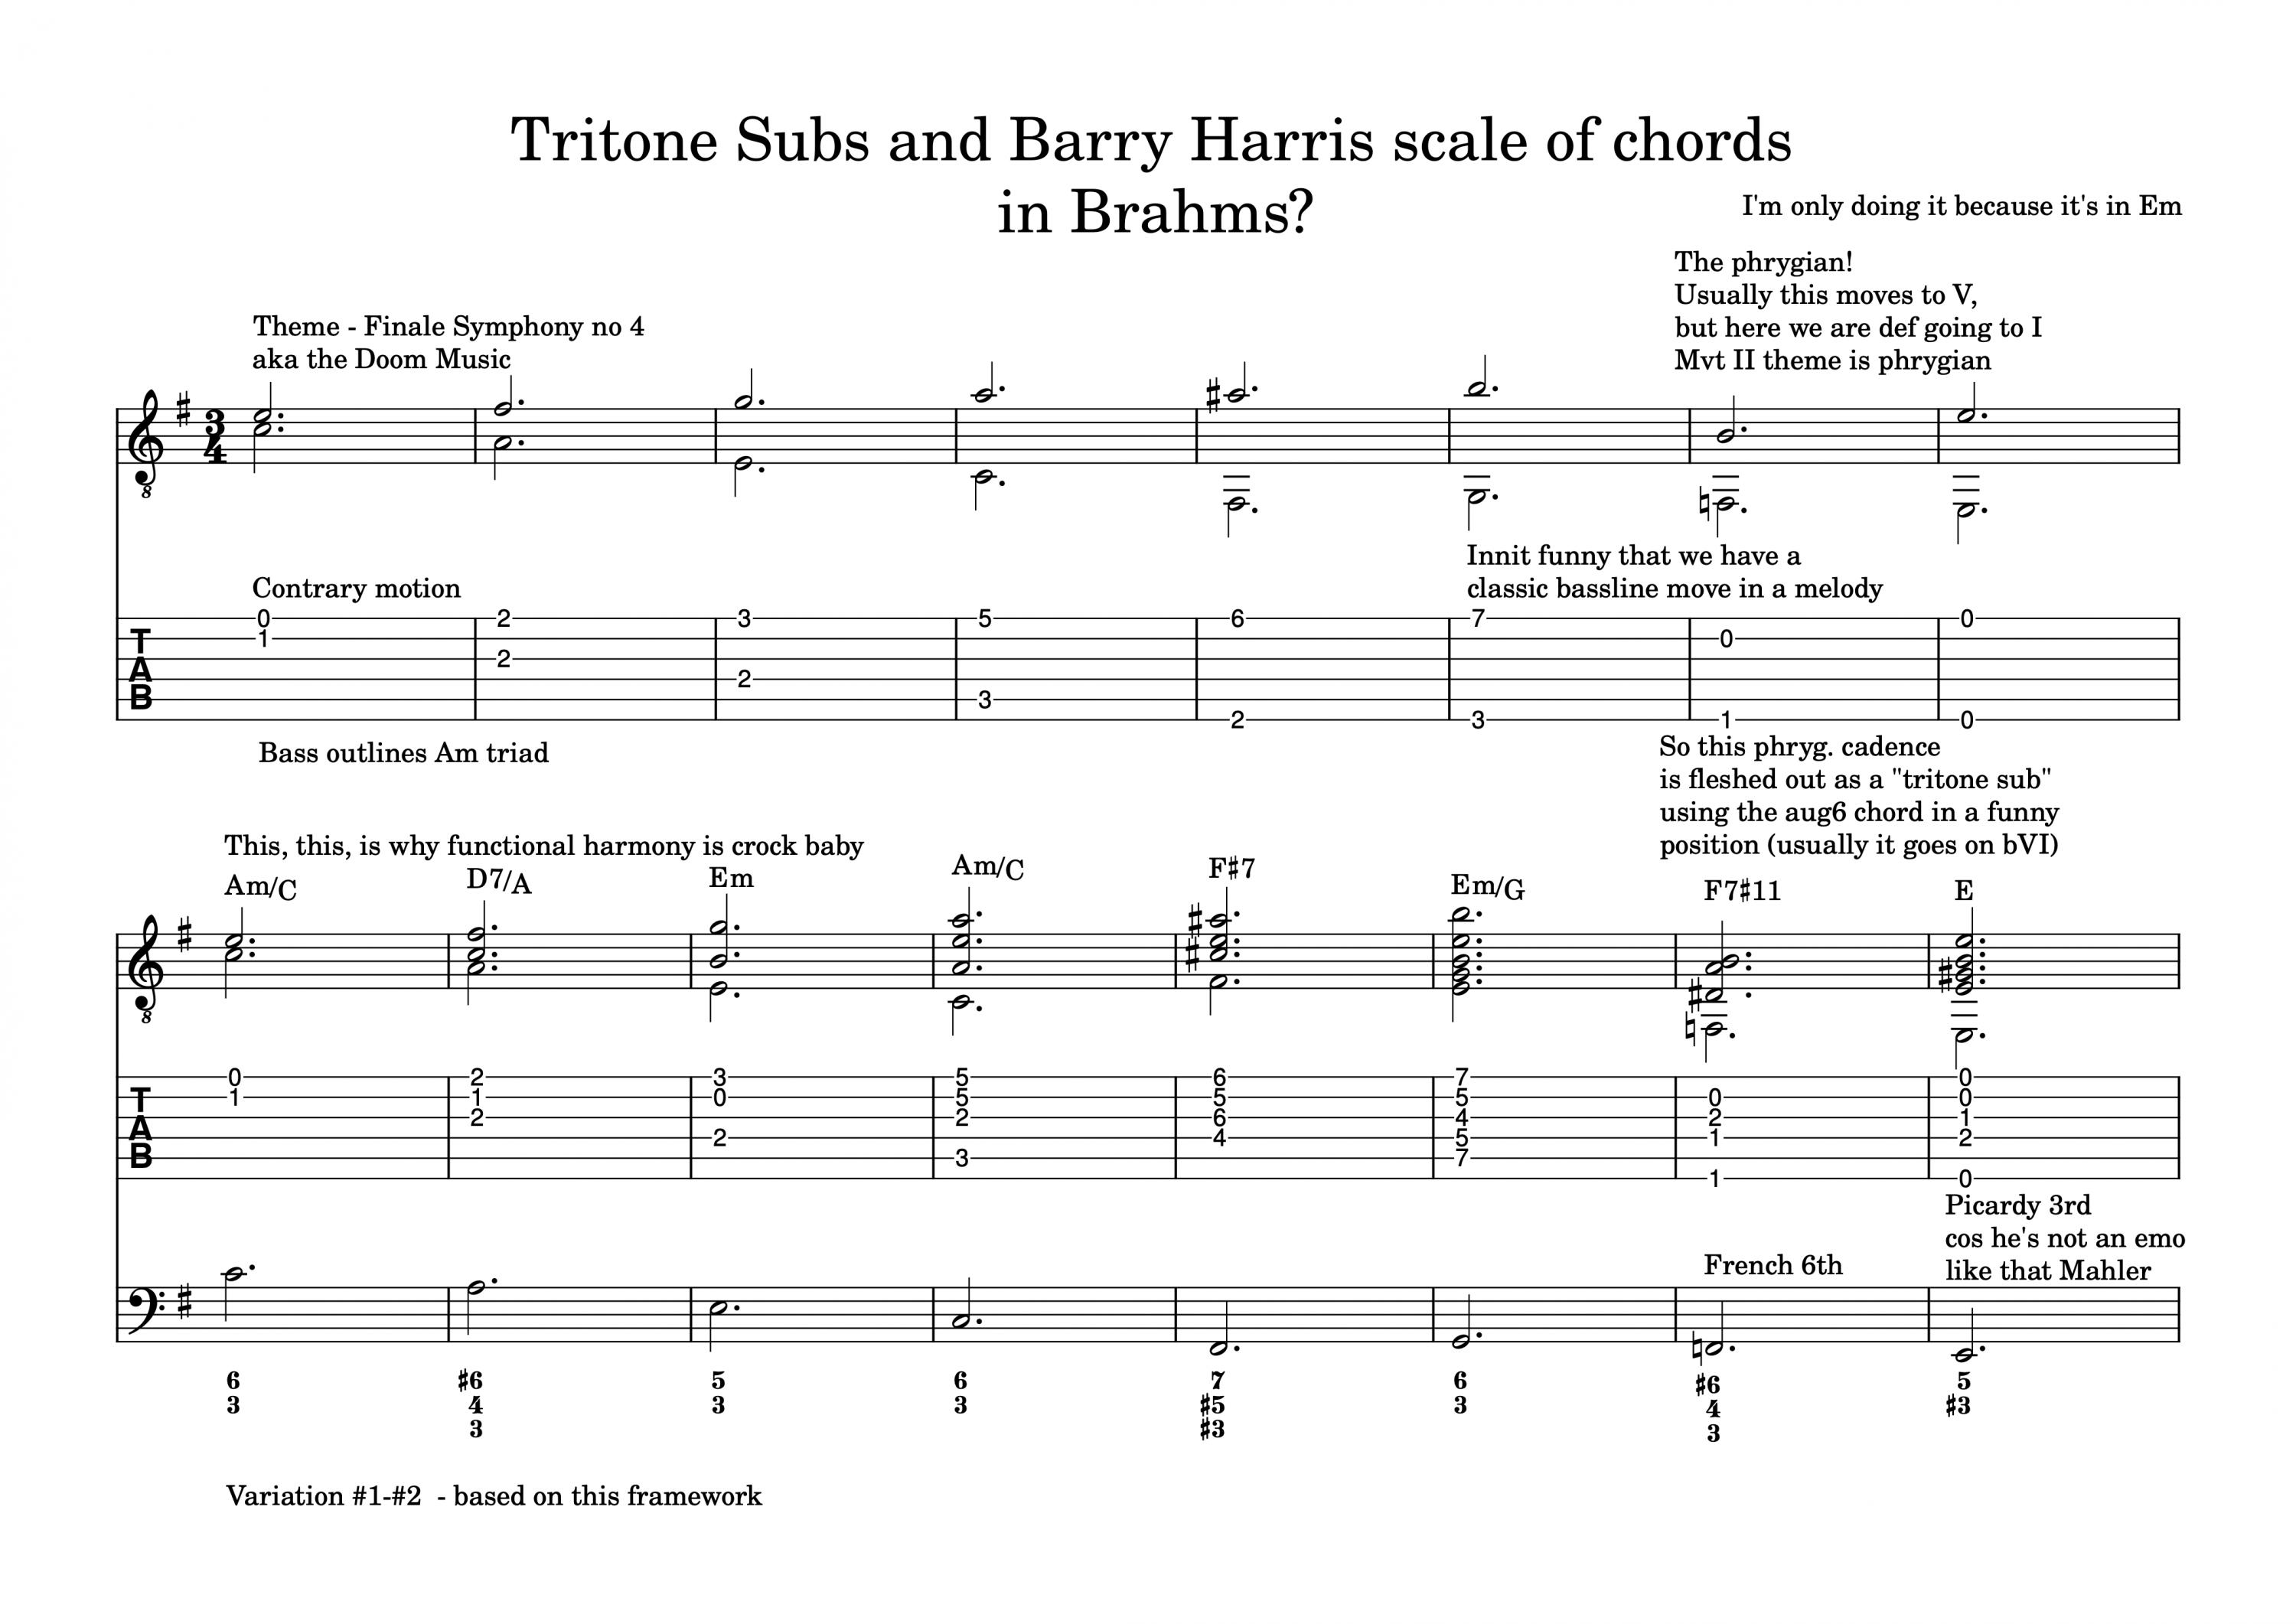 Brahms invents the tritone sub. Prehistory of the min-6 dim scale.-brahms-4-1-jpg